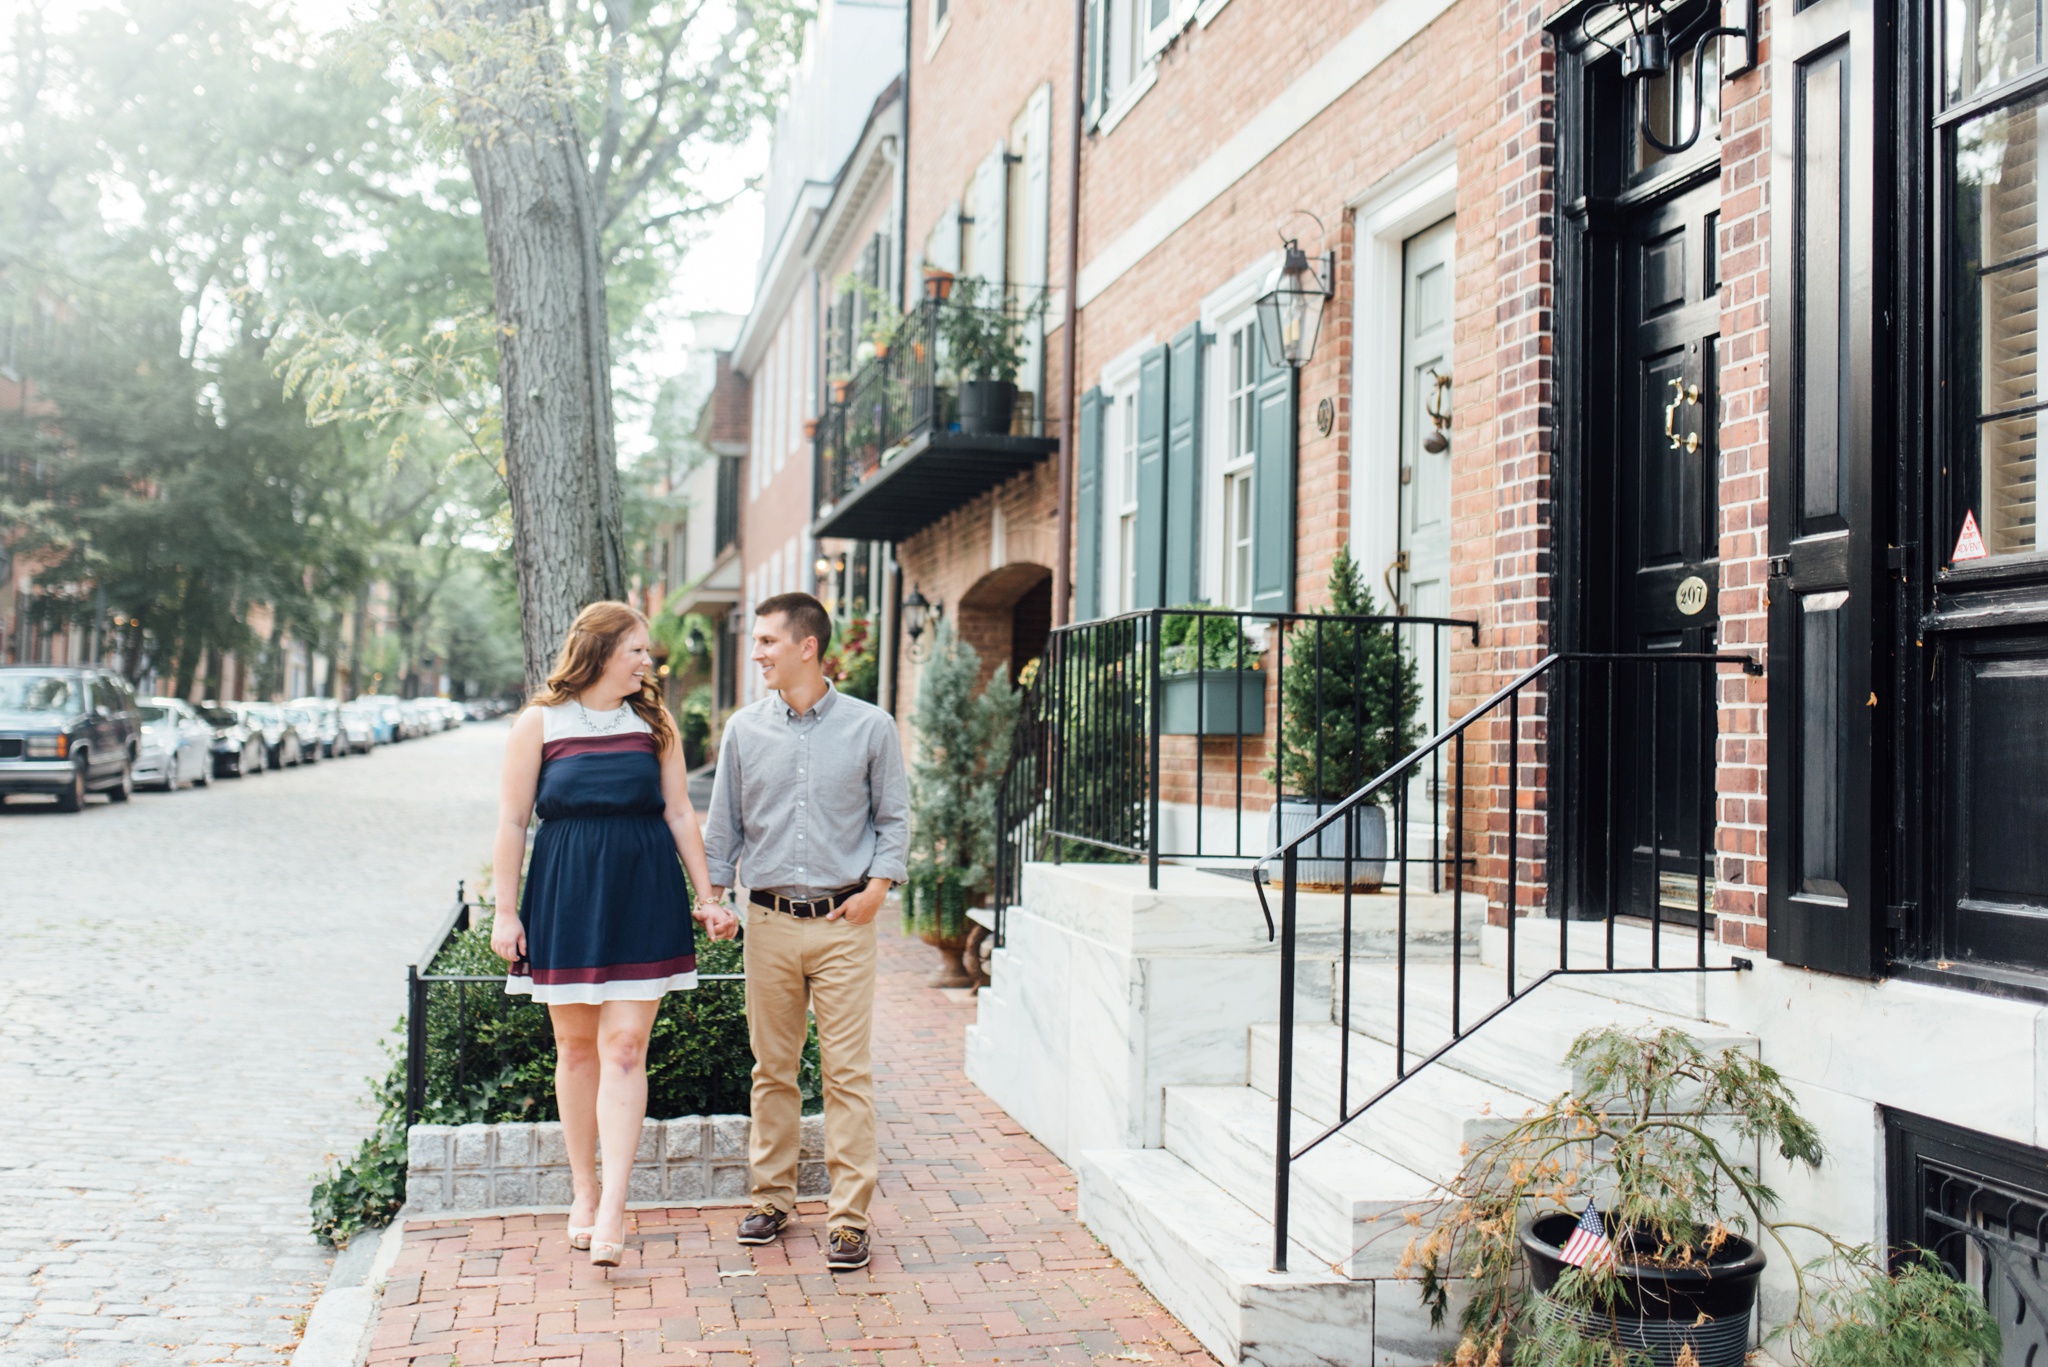 Rachel + Taylor - Spruce Street Harbor Park - Old City Philadelphia Engagement Session - Alison Dunn Photography photo